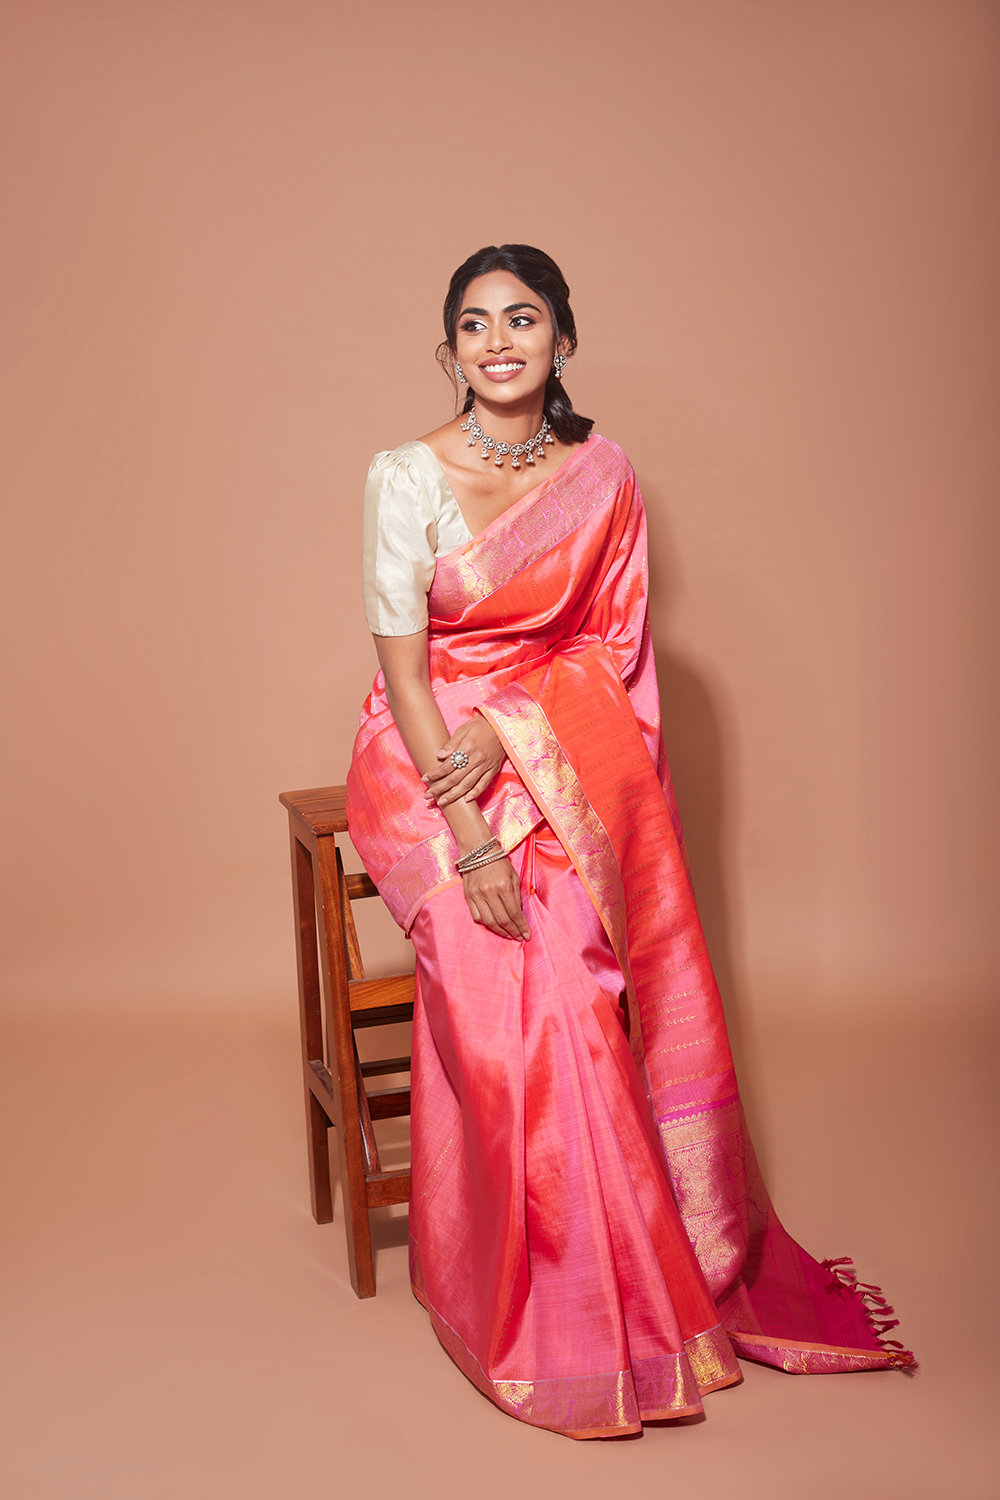 Sundari Silks | WeddingSutra